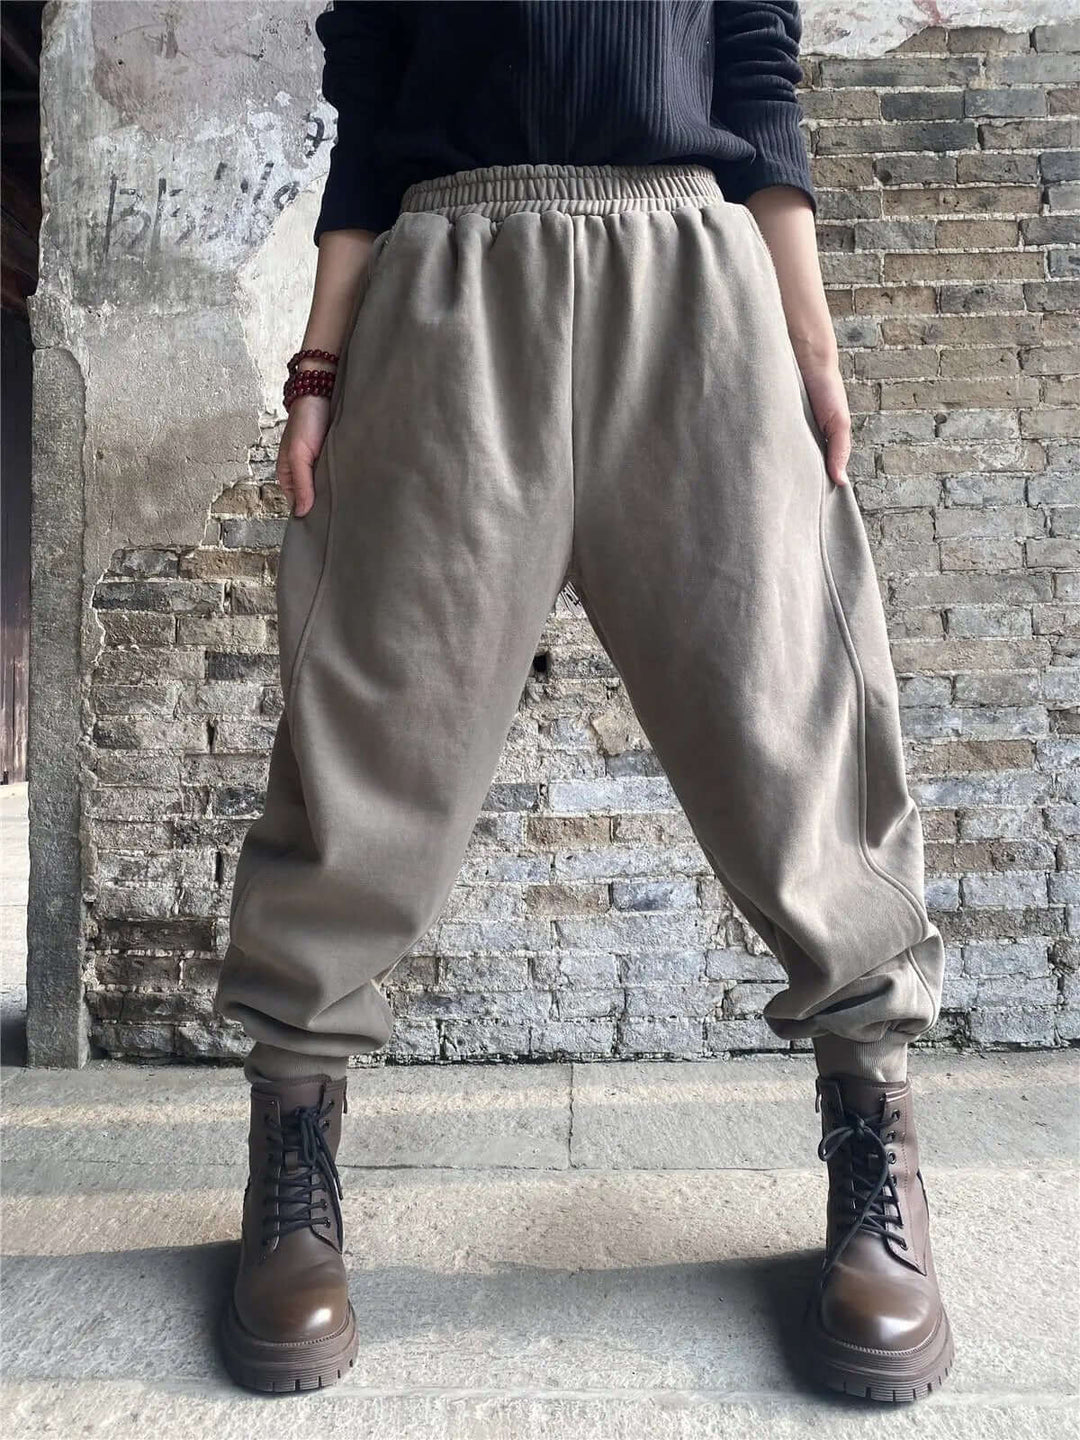 Retro Chic Women's Urban Harem Pants for Stylish Comfort